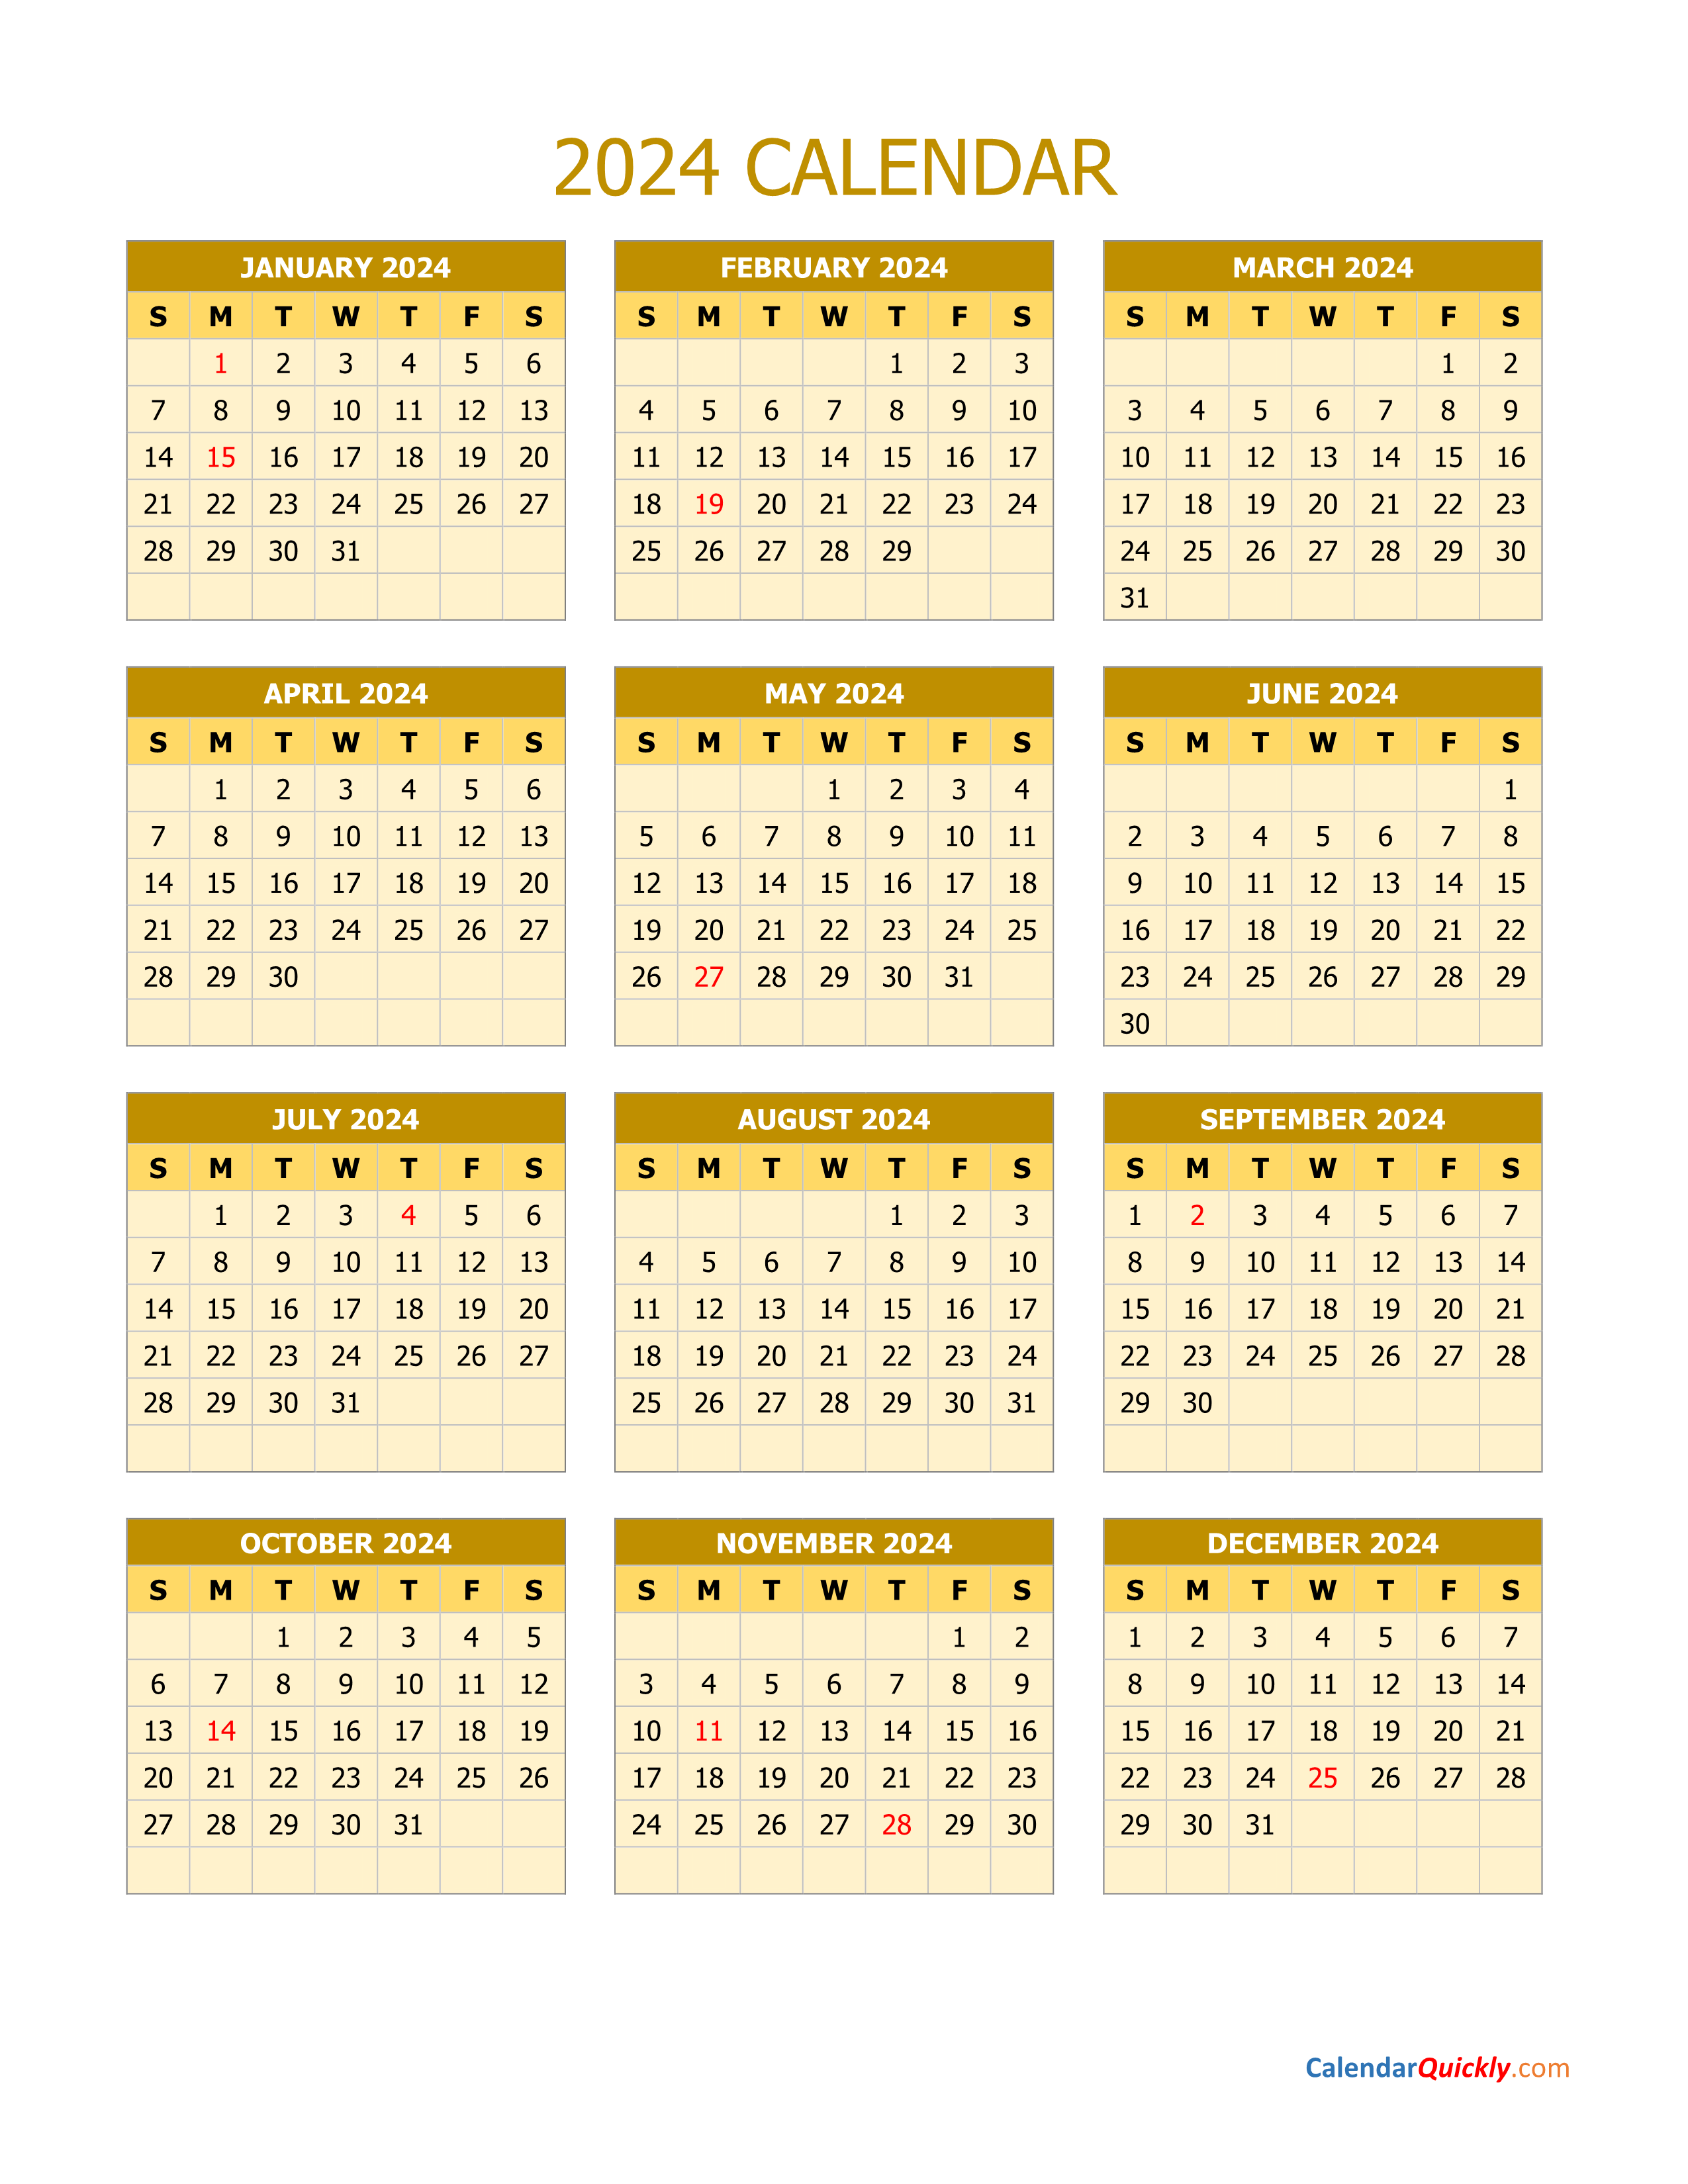 2024-calendar-vertical-calendar-quickly